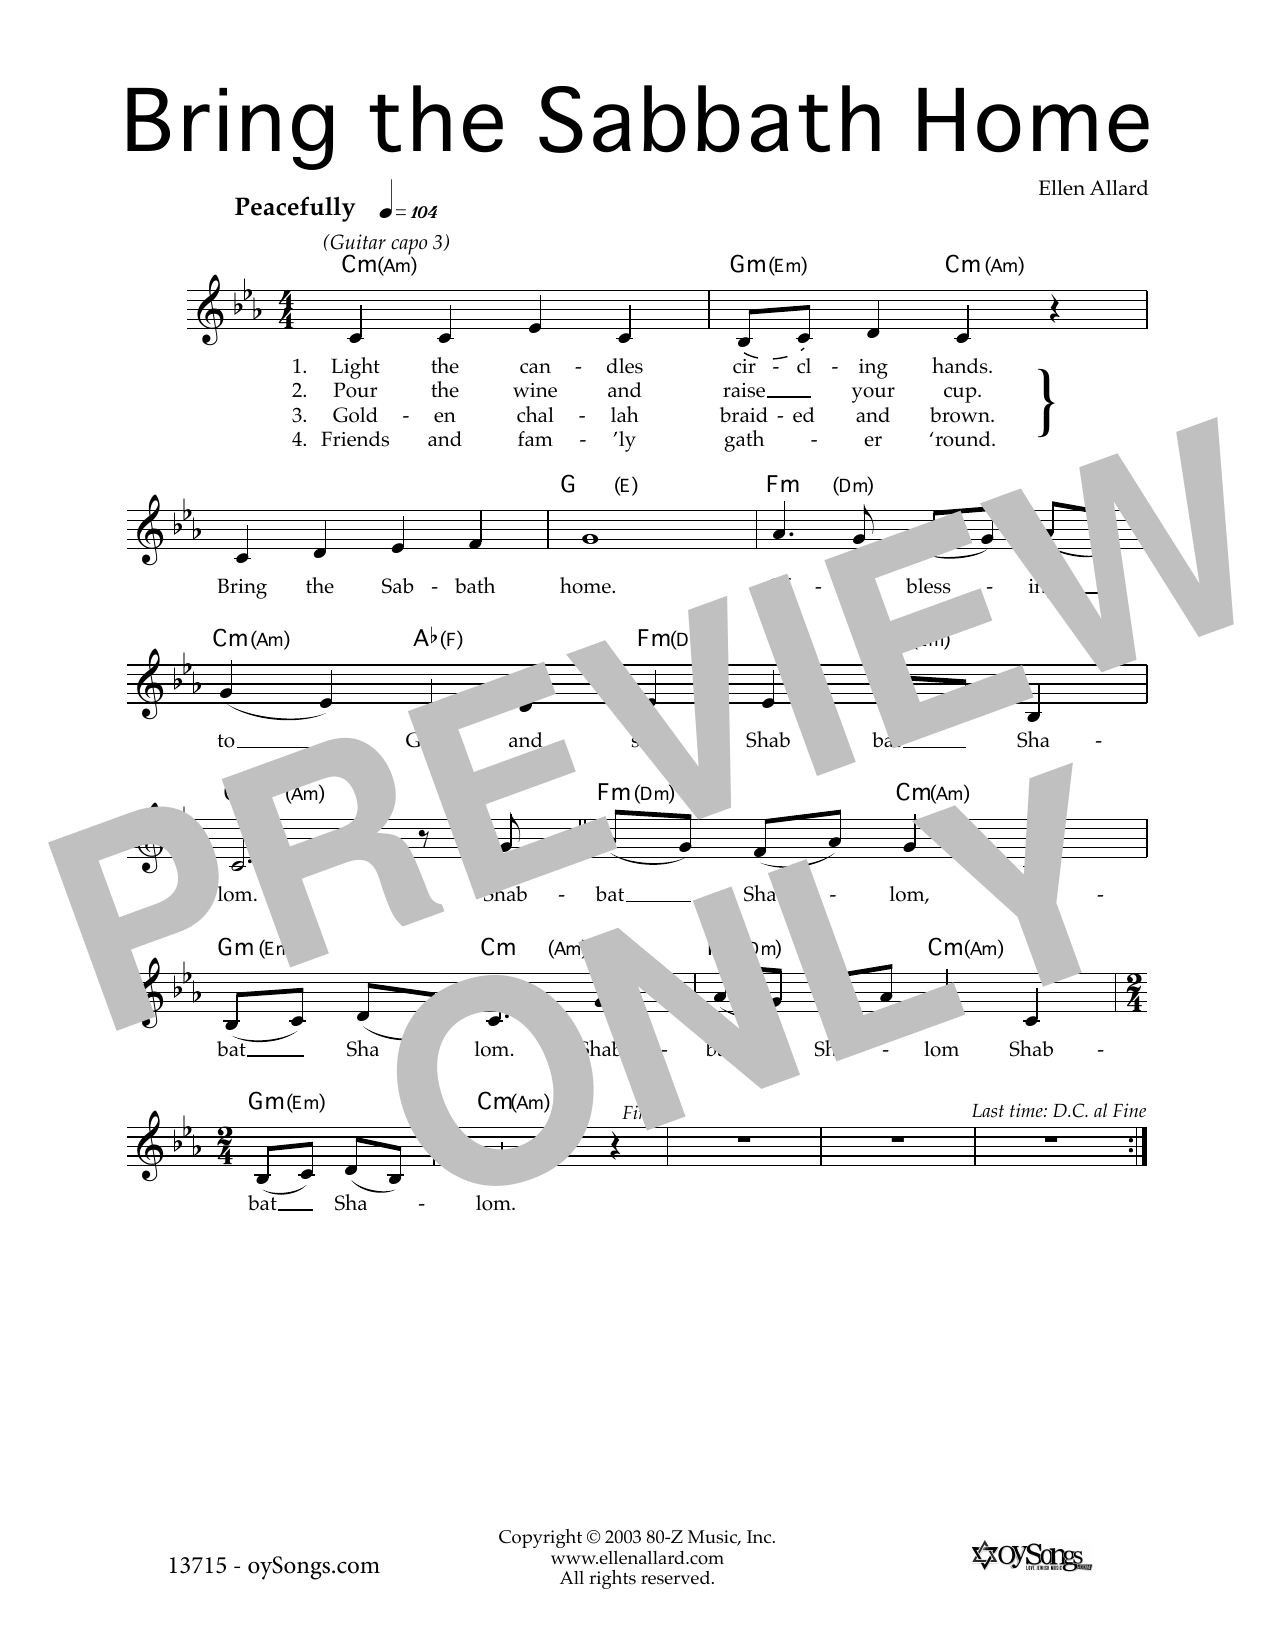 Ellen Allard Bring the Sabbath Home Sheet Music Notes & Chords for Melody Line, Lyrics & Chords - Download or Print PDF